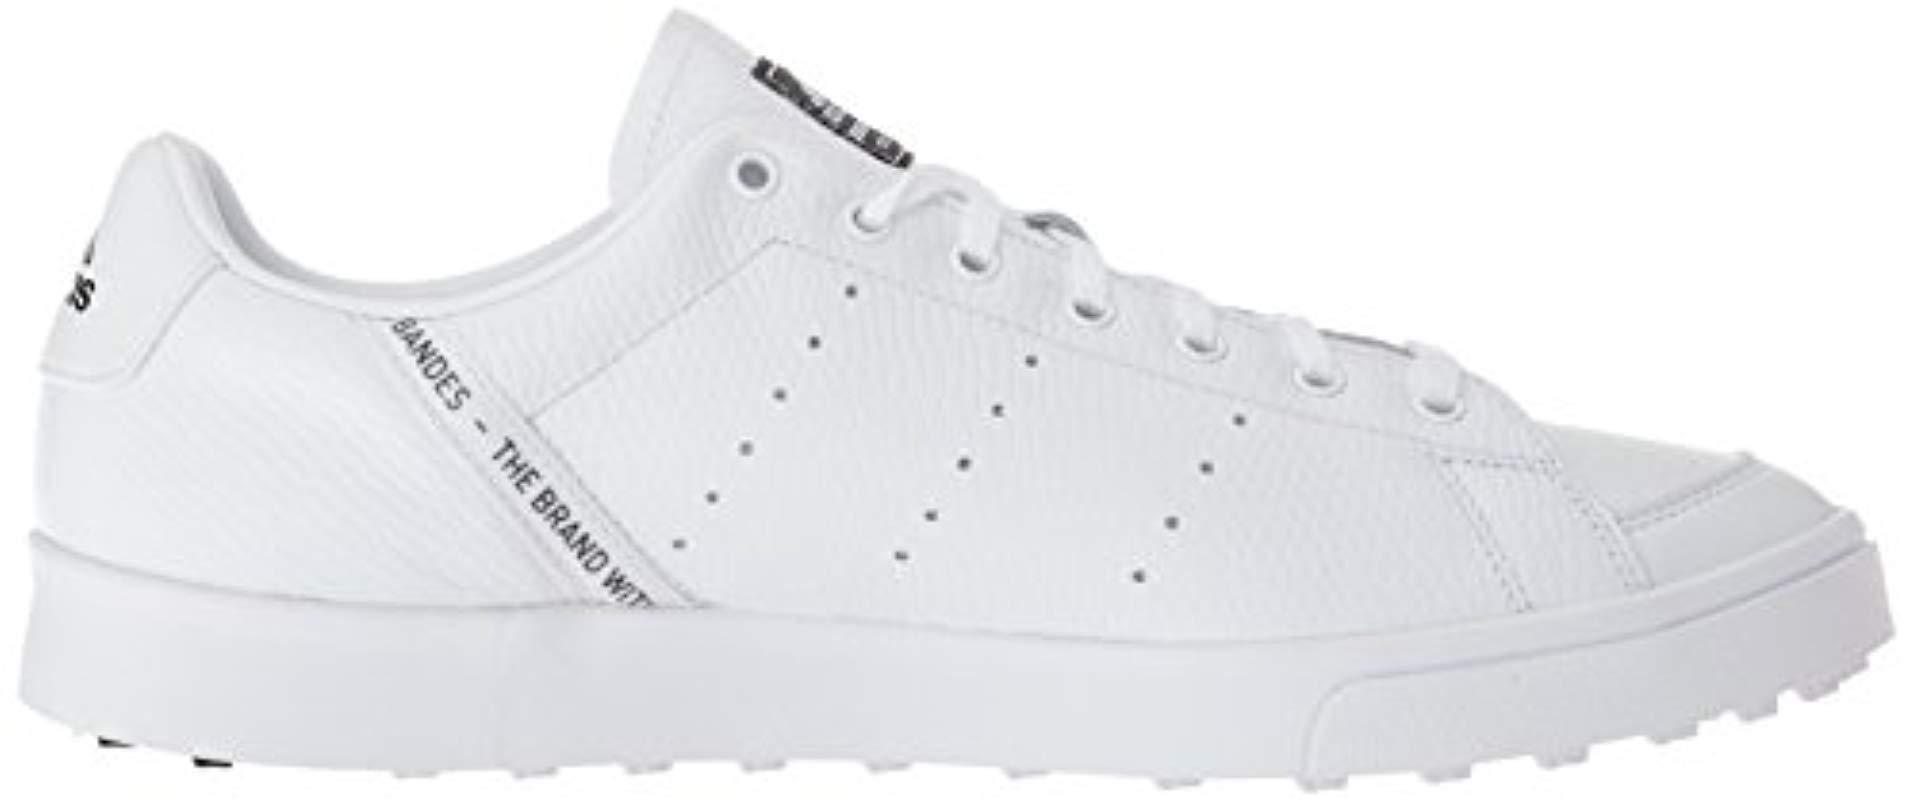 adidas adicross classic golf shoes  core black/ftwr white